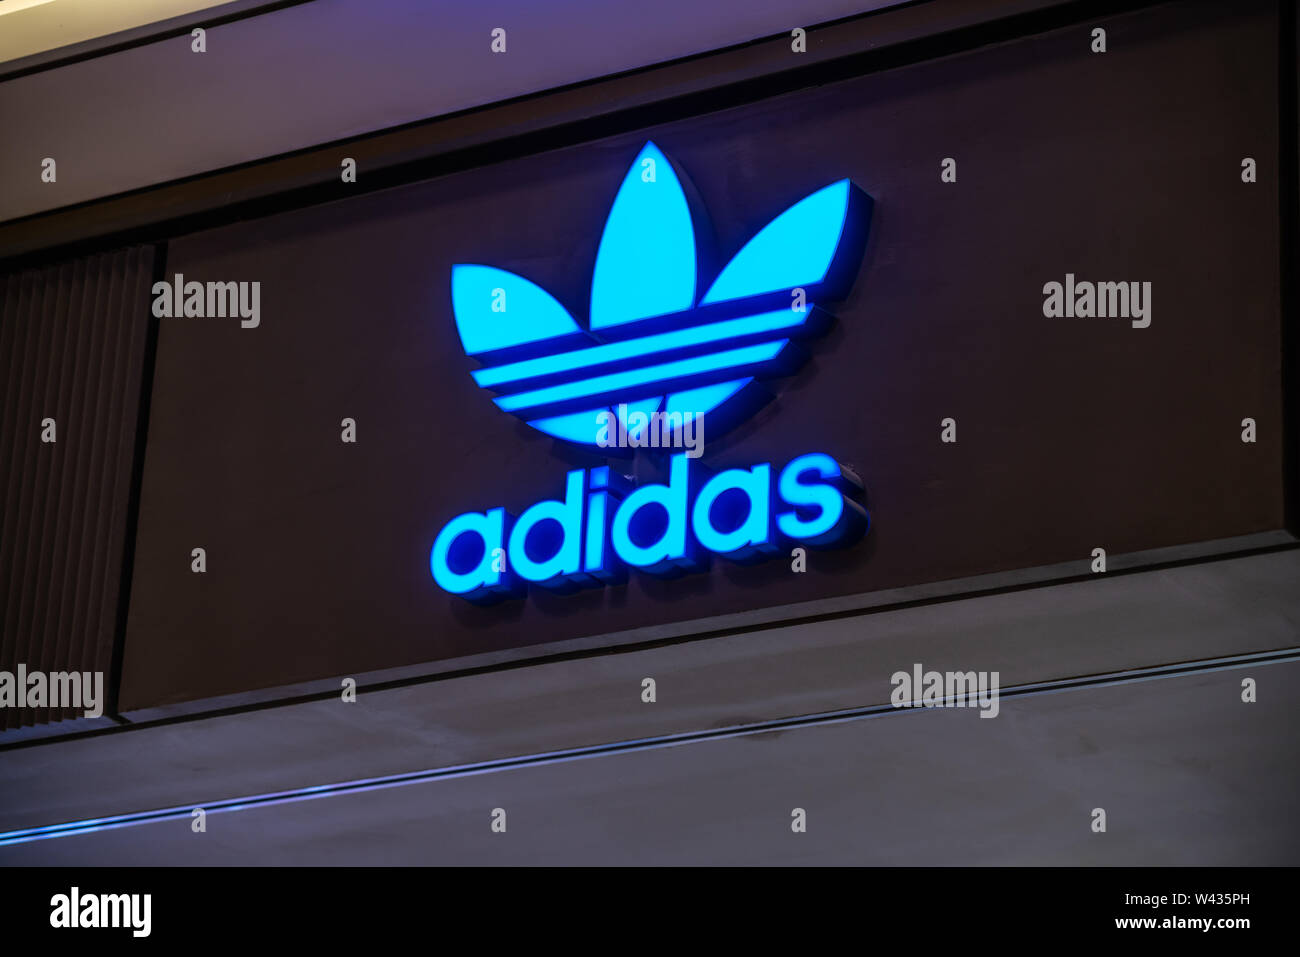 Adidas Original High Resolution Stock Photography and Images - Alamy